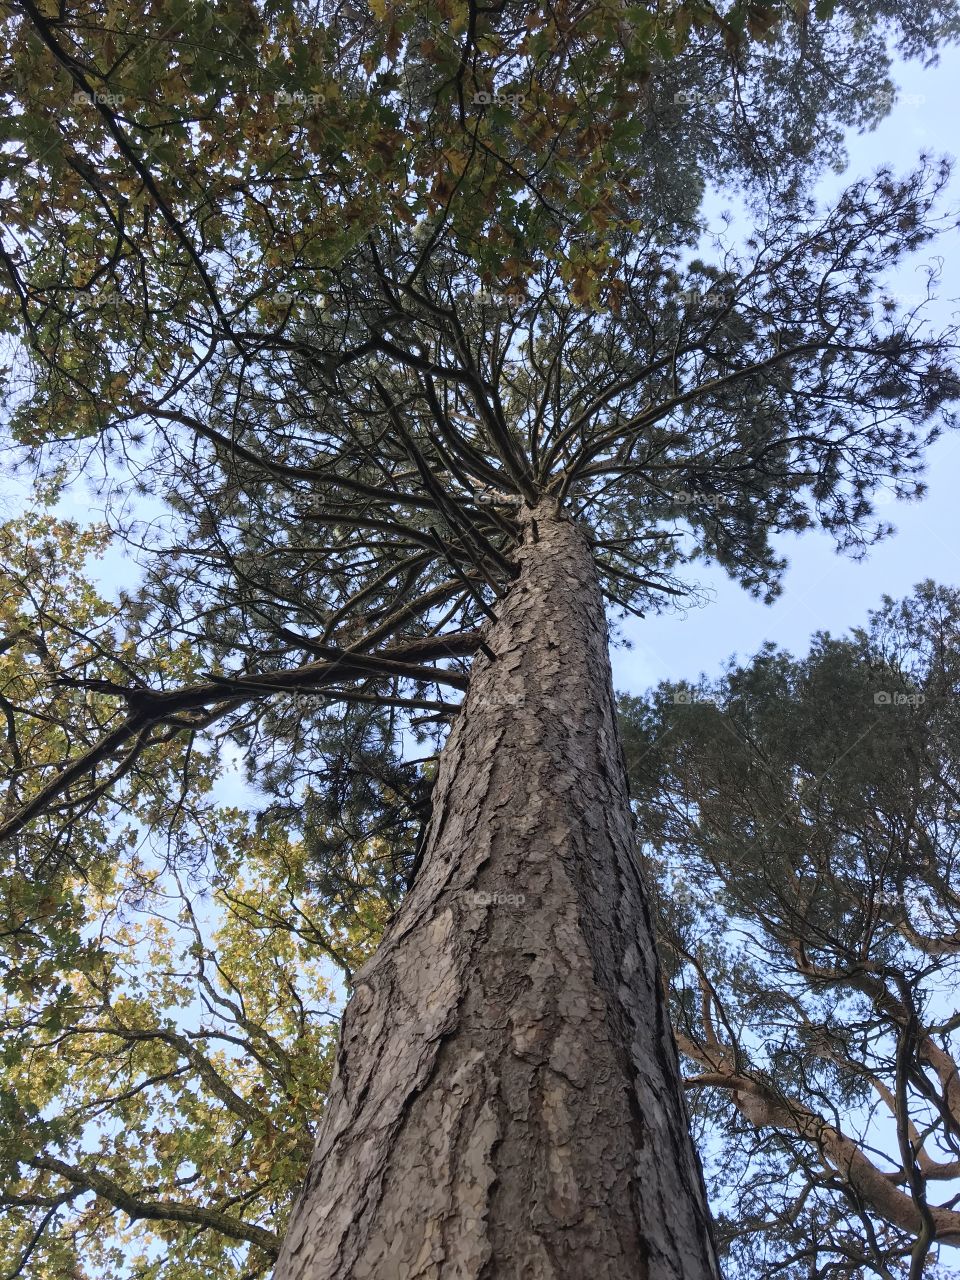 Up the tree